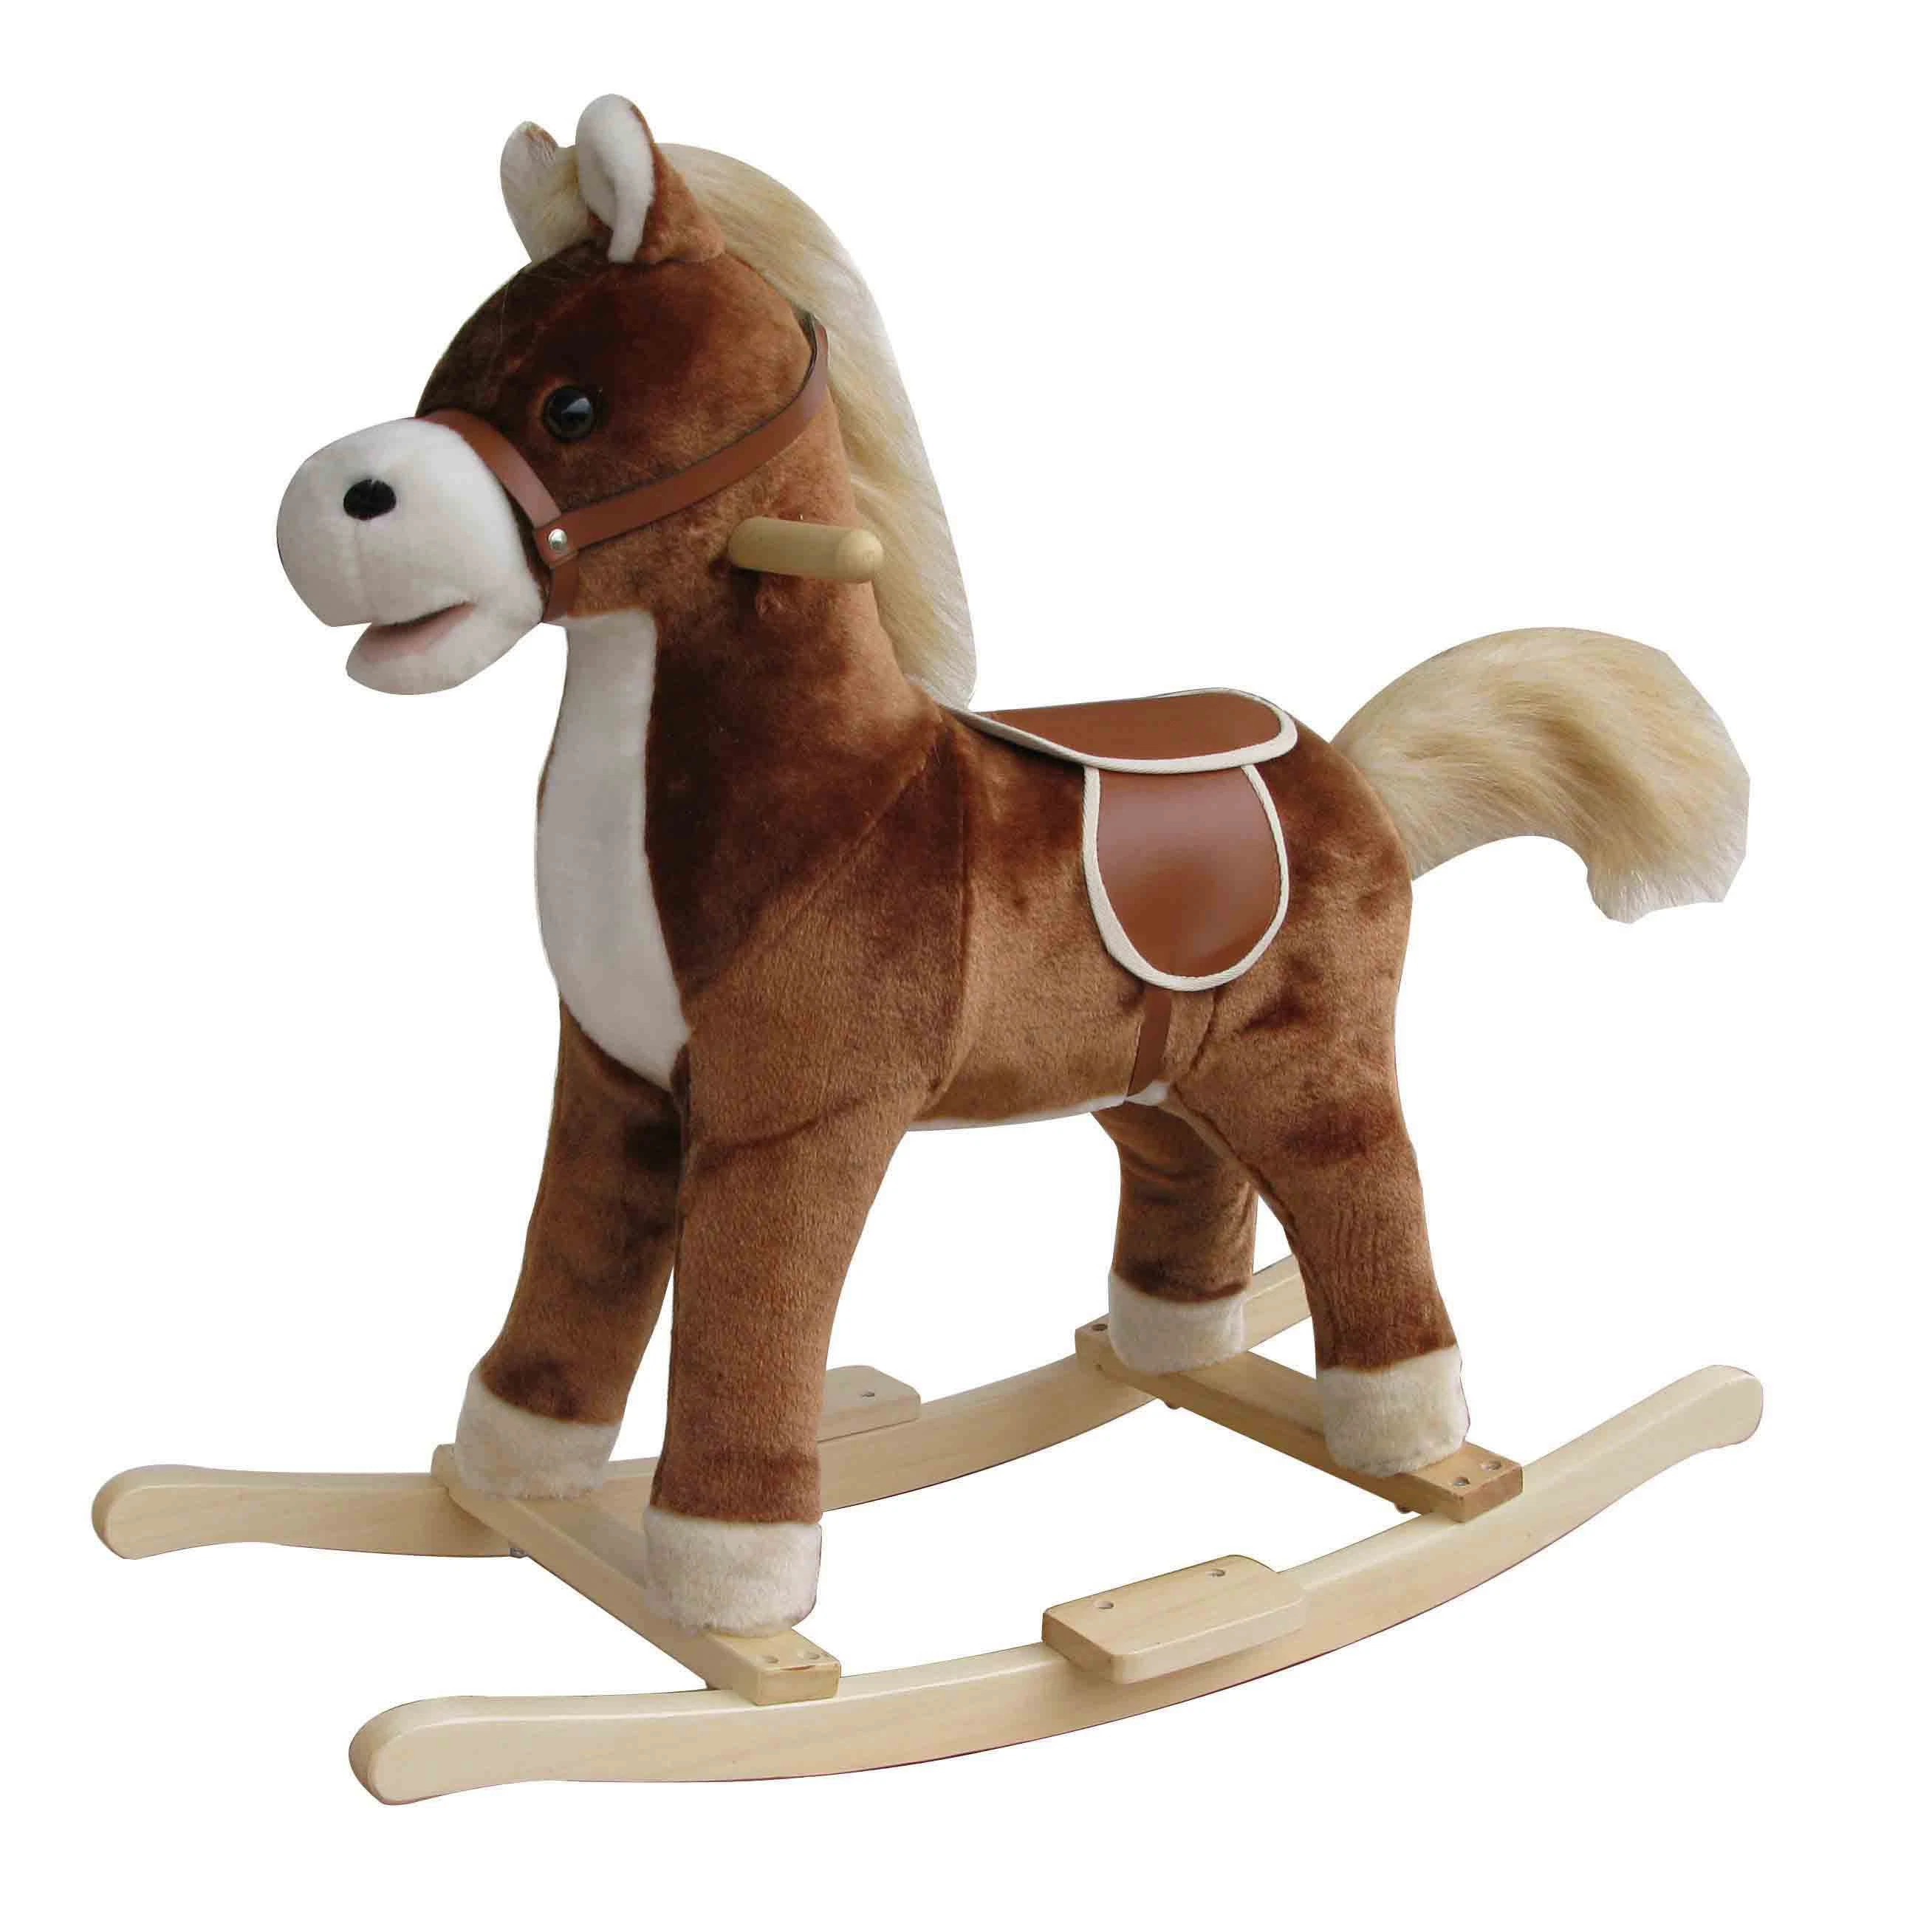 Custom Kids Ride on Trojan Electrical Plush caballo de madera Fabricante de juguetes